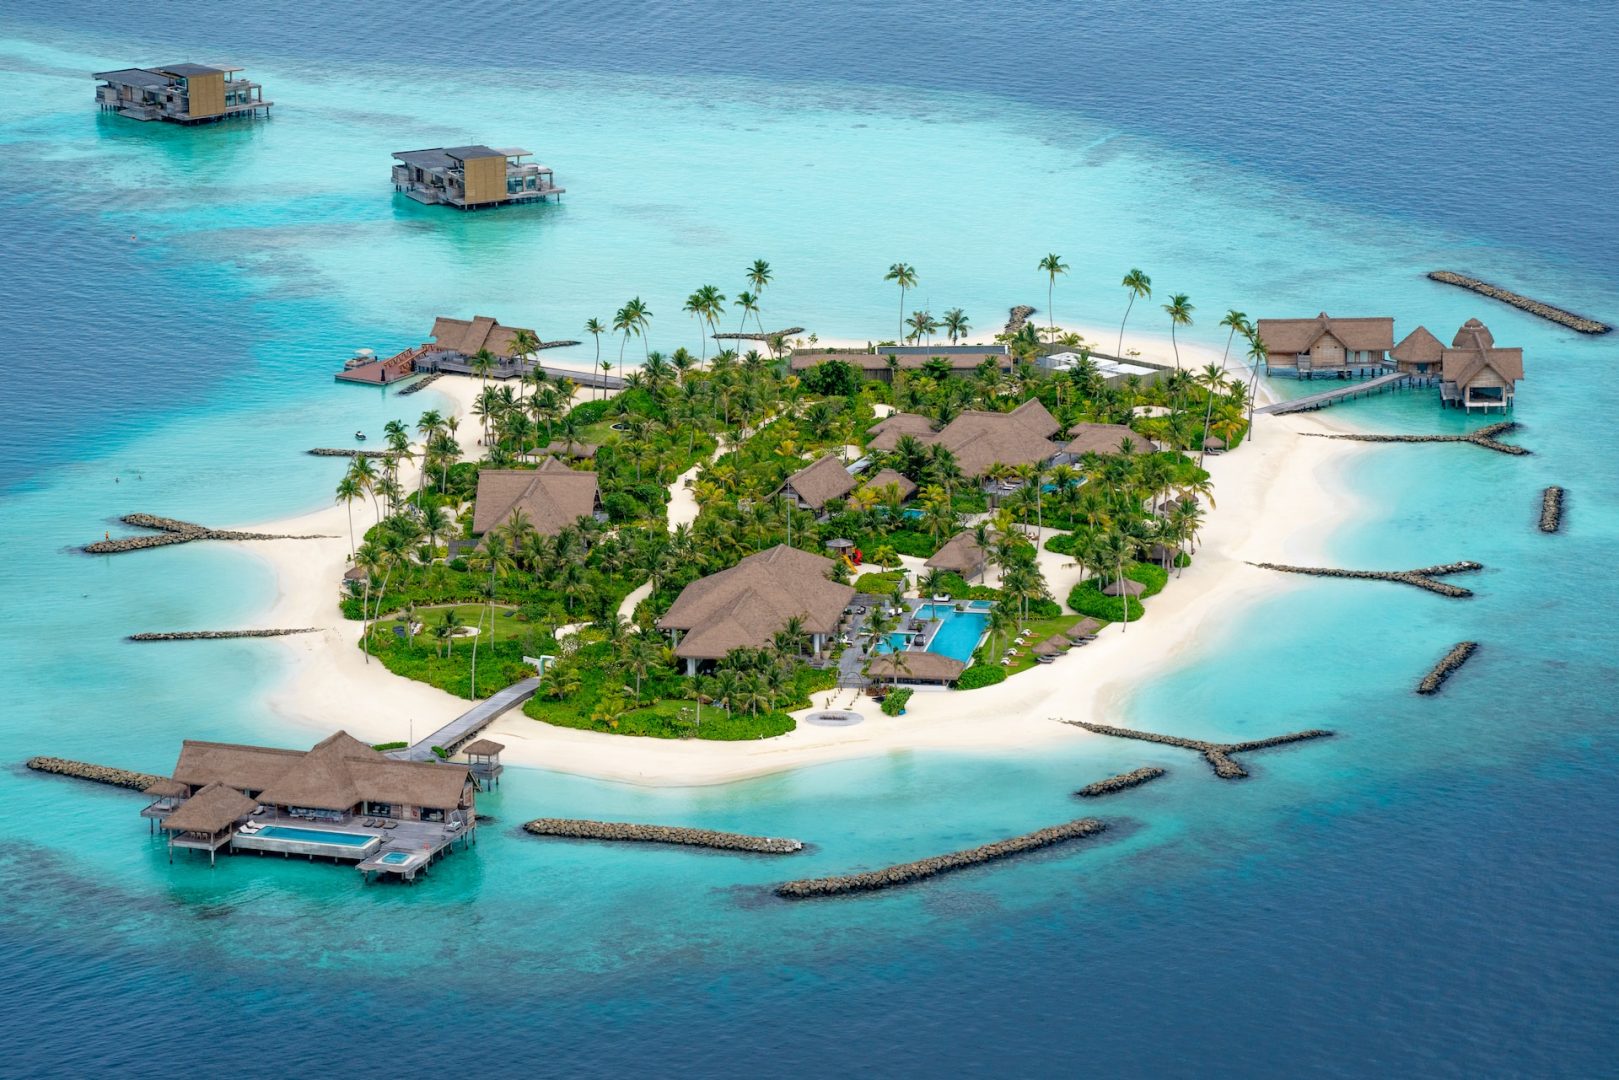 Island Allure: Decoding India’s Call to “Explore Indian Islands” Amidst the Maldives Conundrum